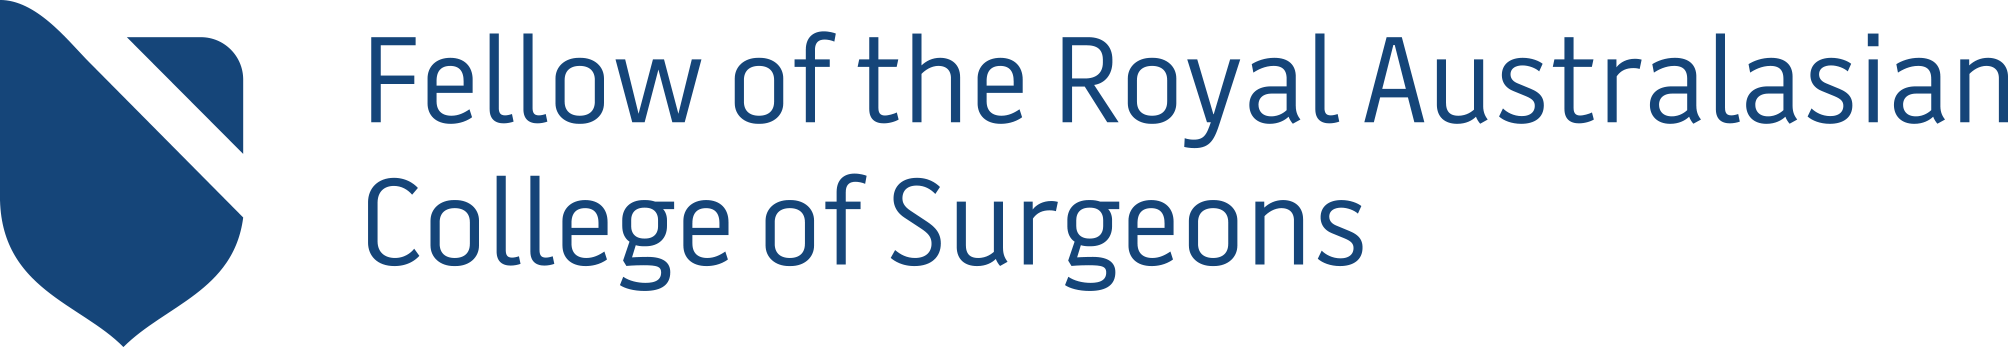 Fellow of the Royal Australasian College of Surgeons logo